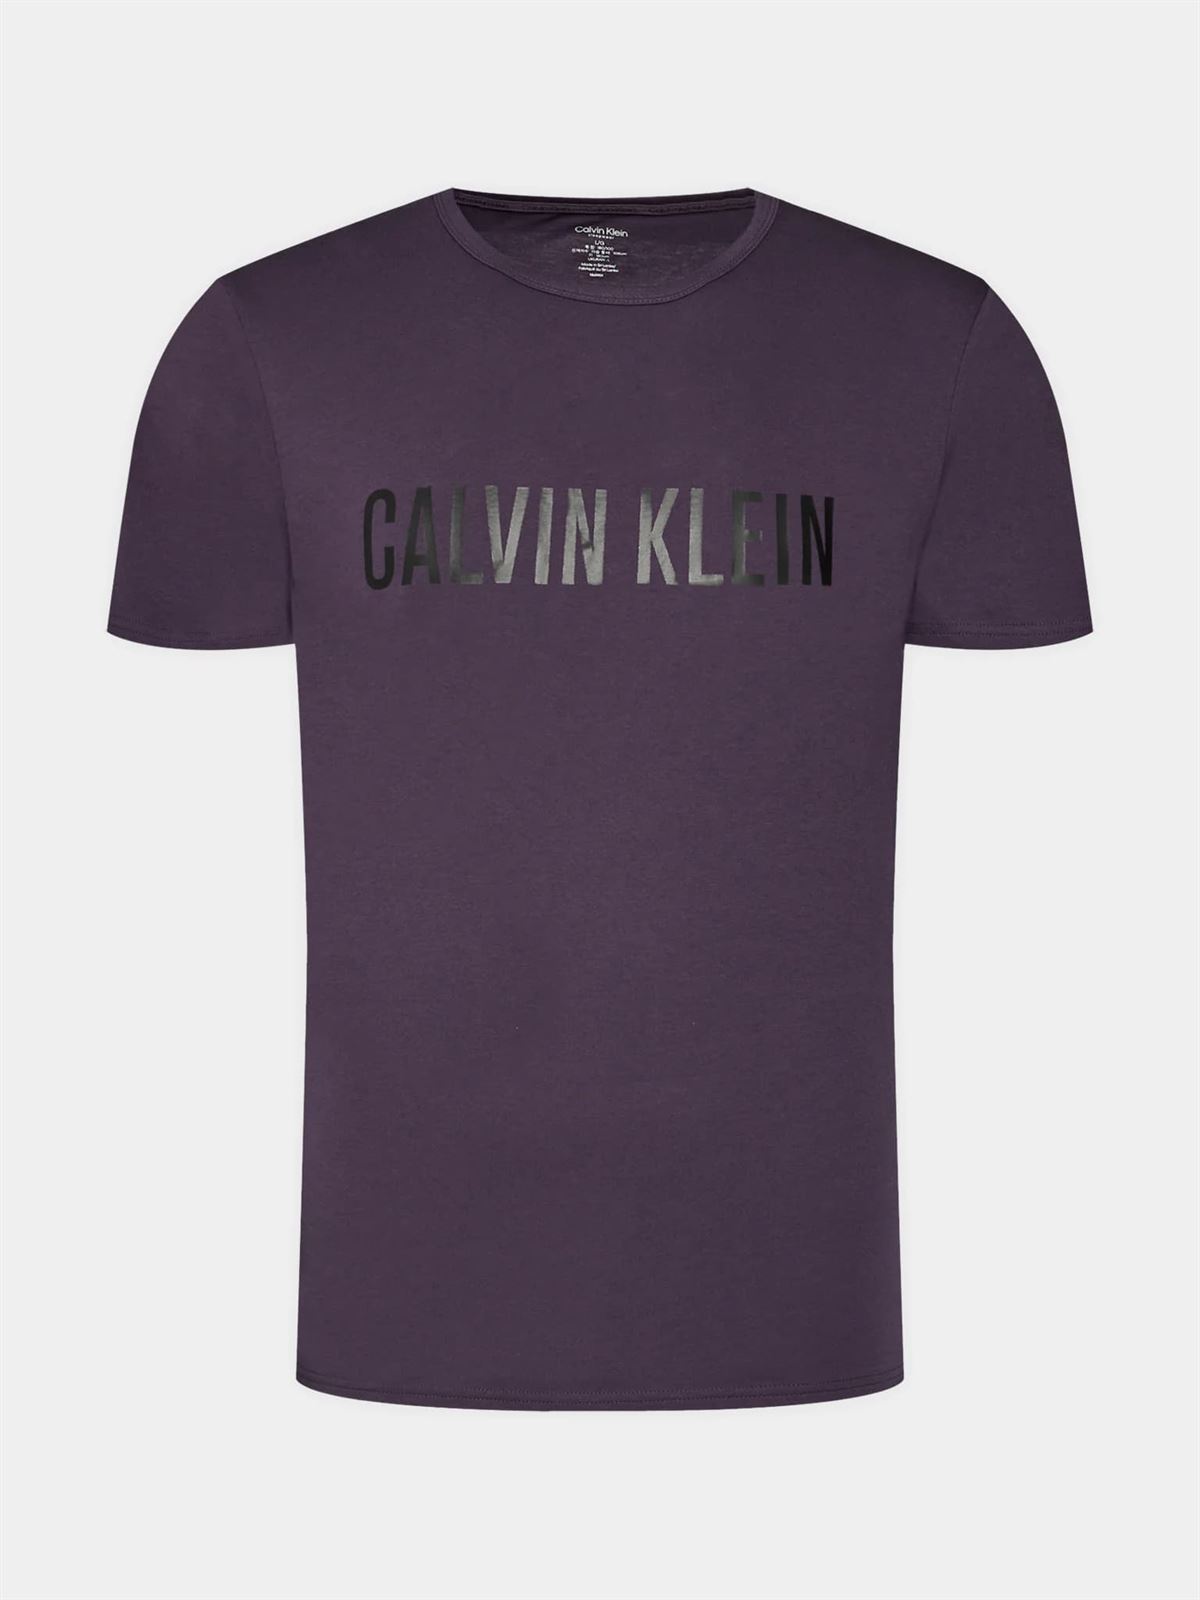 Camiseta Calvin Klein S/S Crew Neck 000NM1959E VE5 Mysterioso - Imagen 4